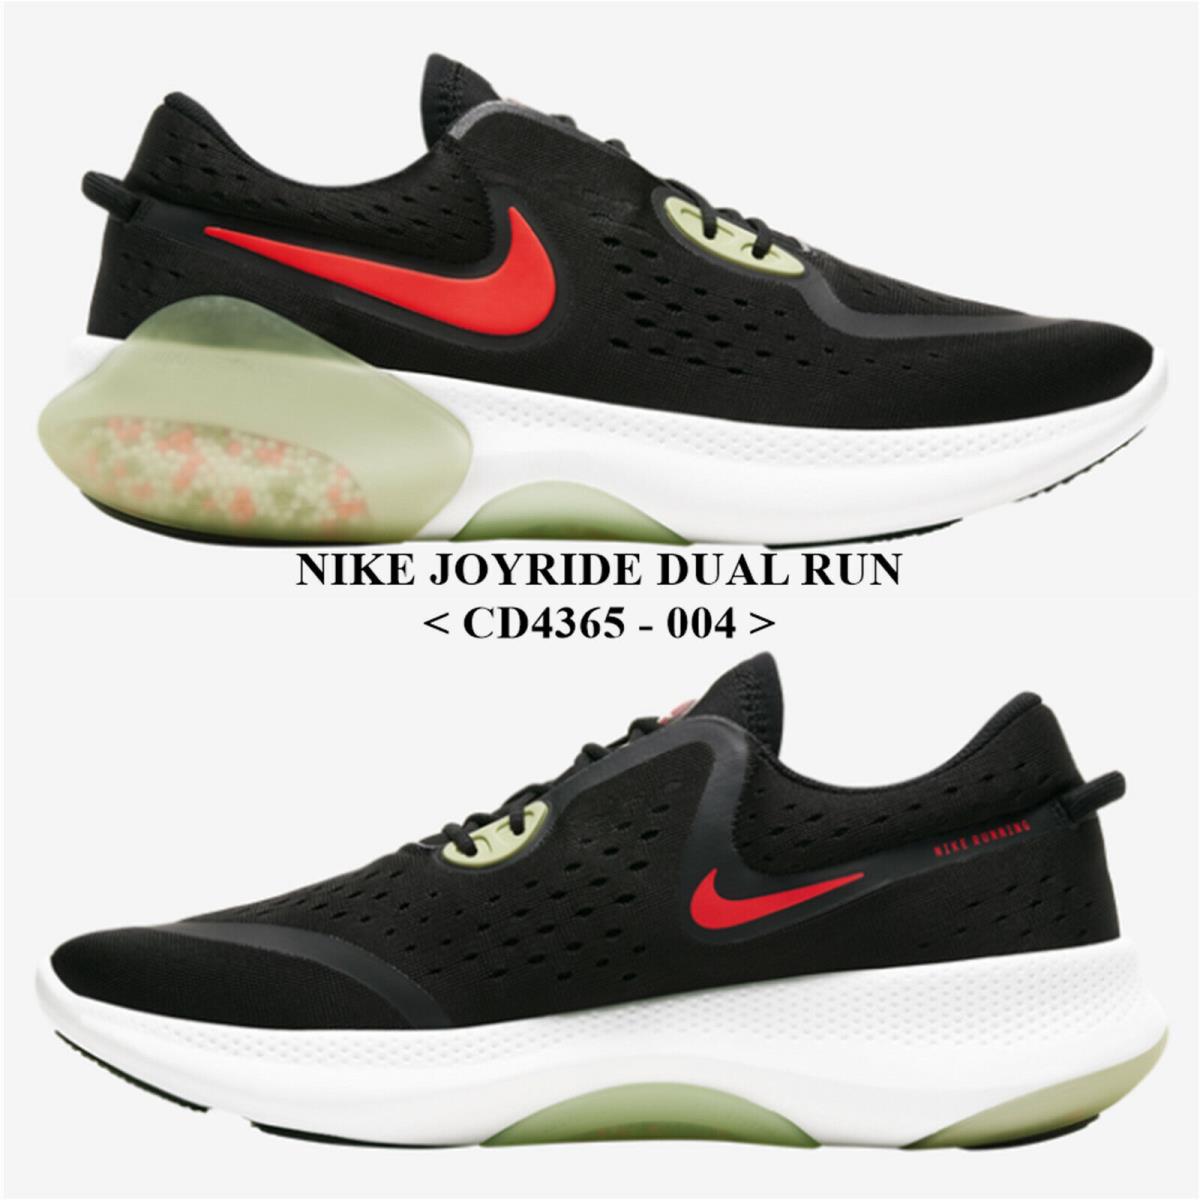 Nike Joyride Dual Run <CD4365 - 004> Men`s Running Shoes with Box